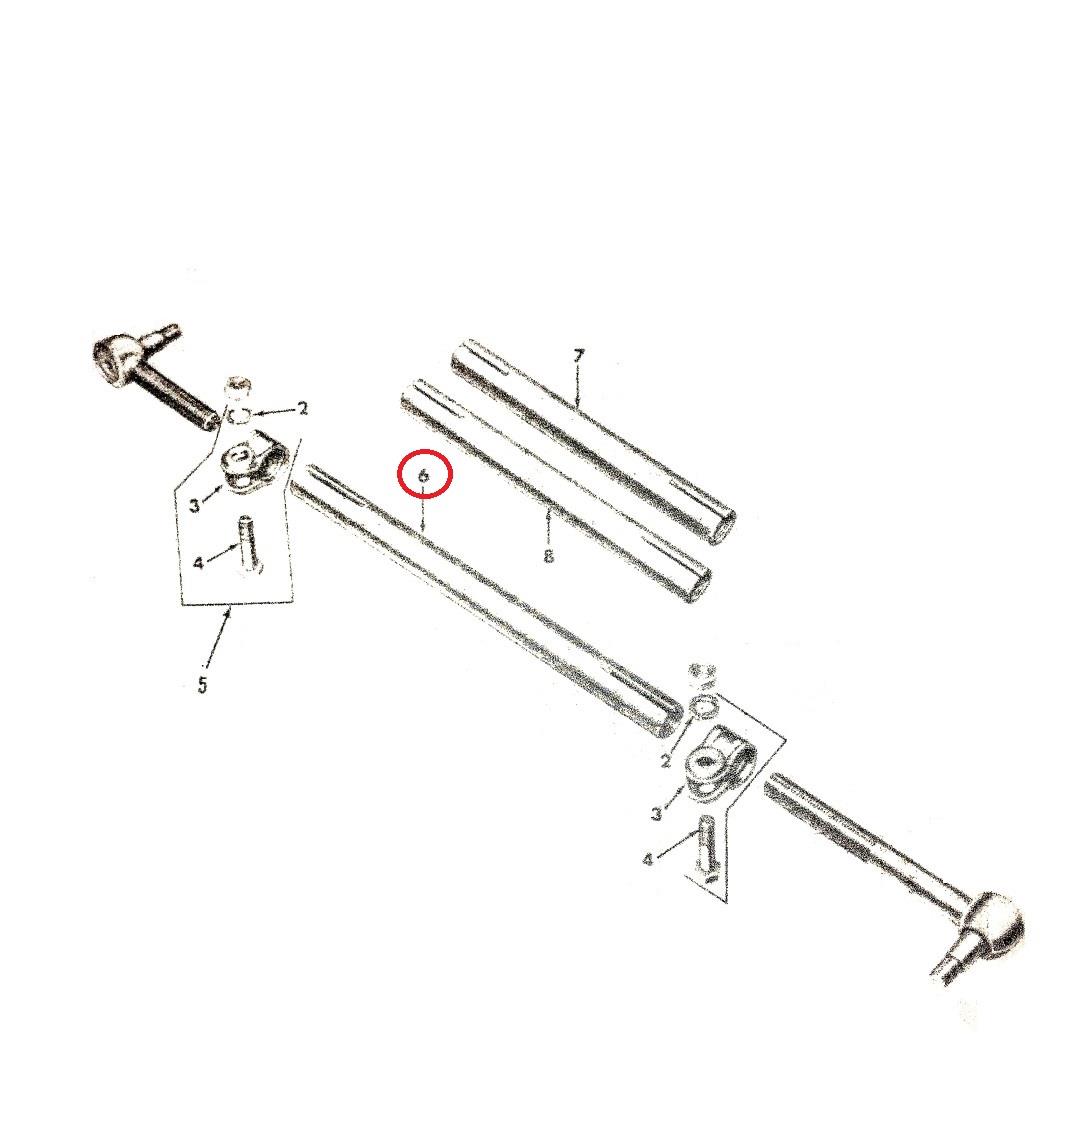 MU-188 | MU-188 Steering Linkage Drag Link Assembly with Long Sleeve Mule M274 Parts Diagram (Large).JPG